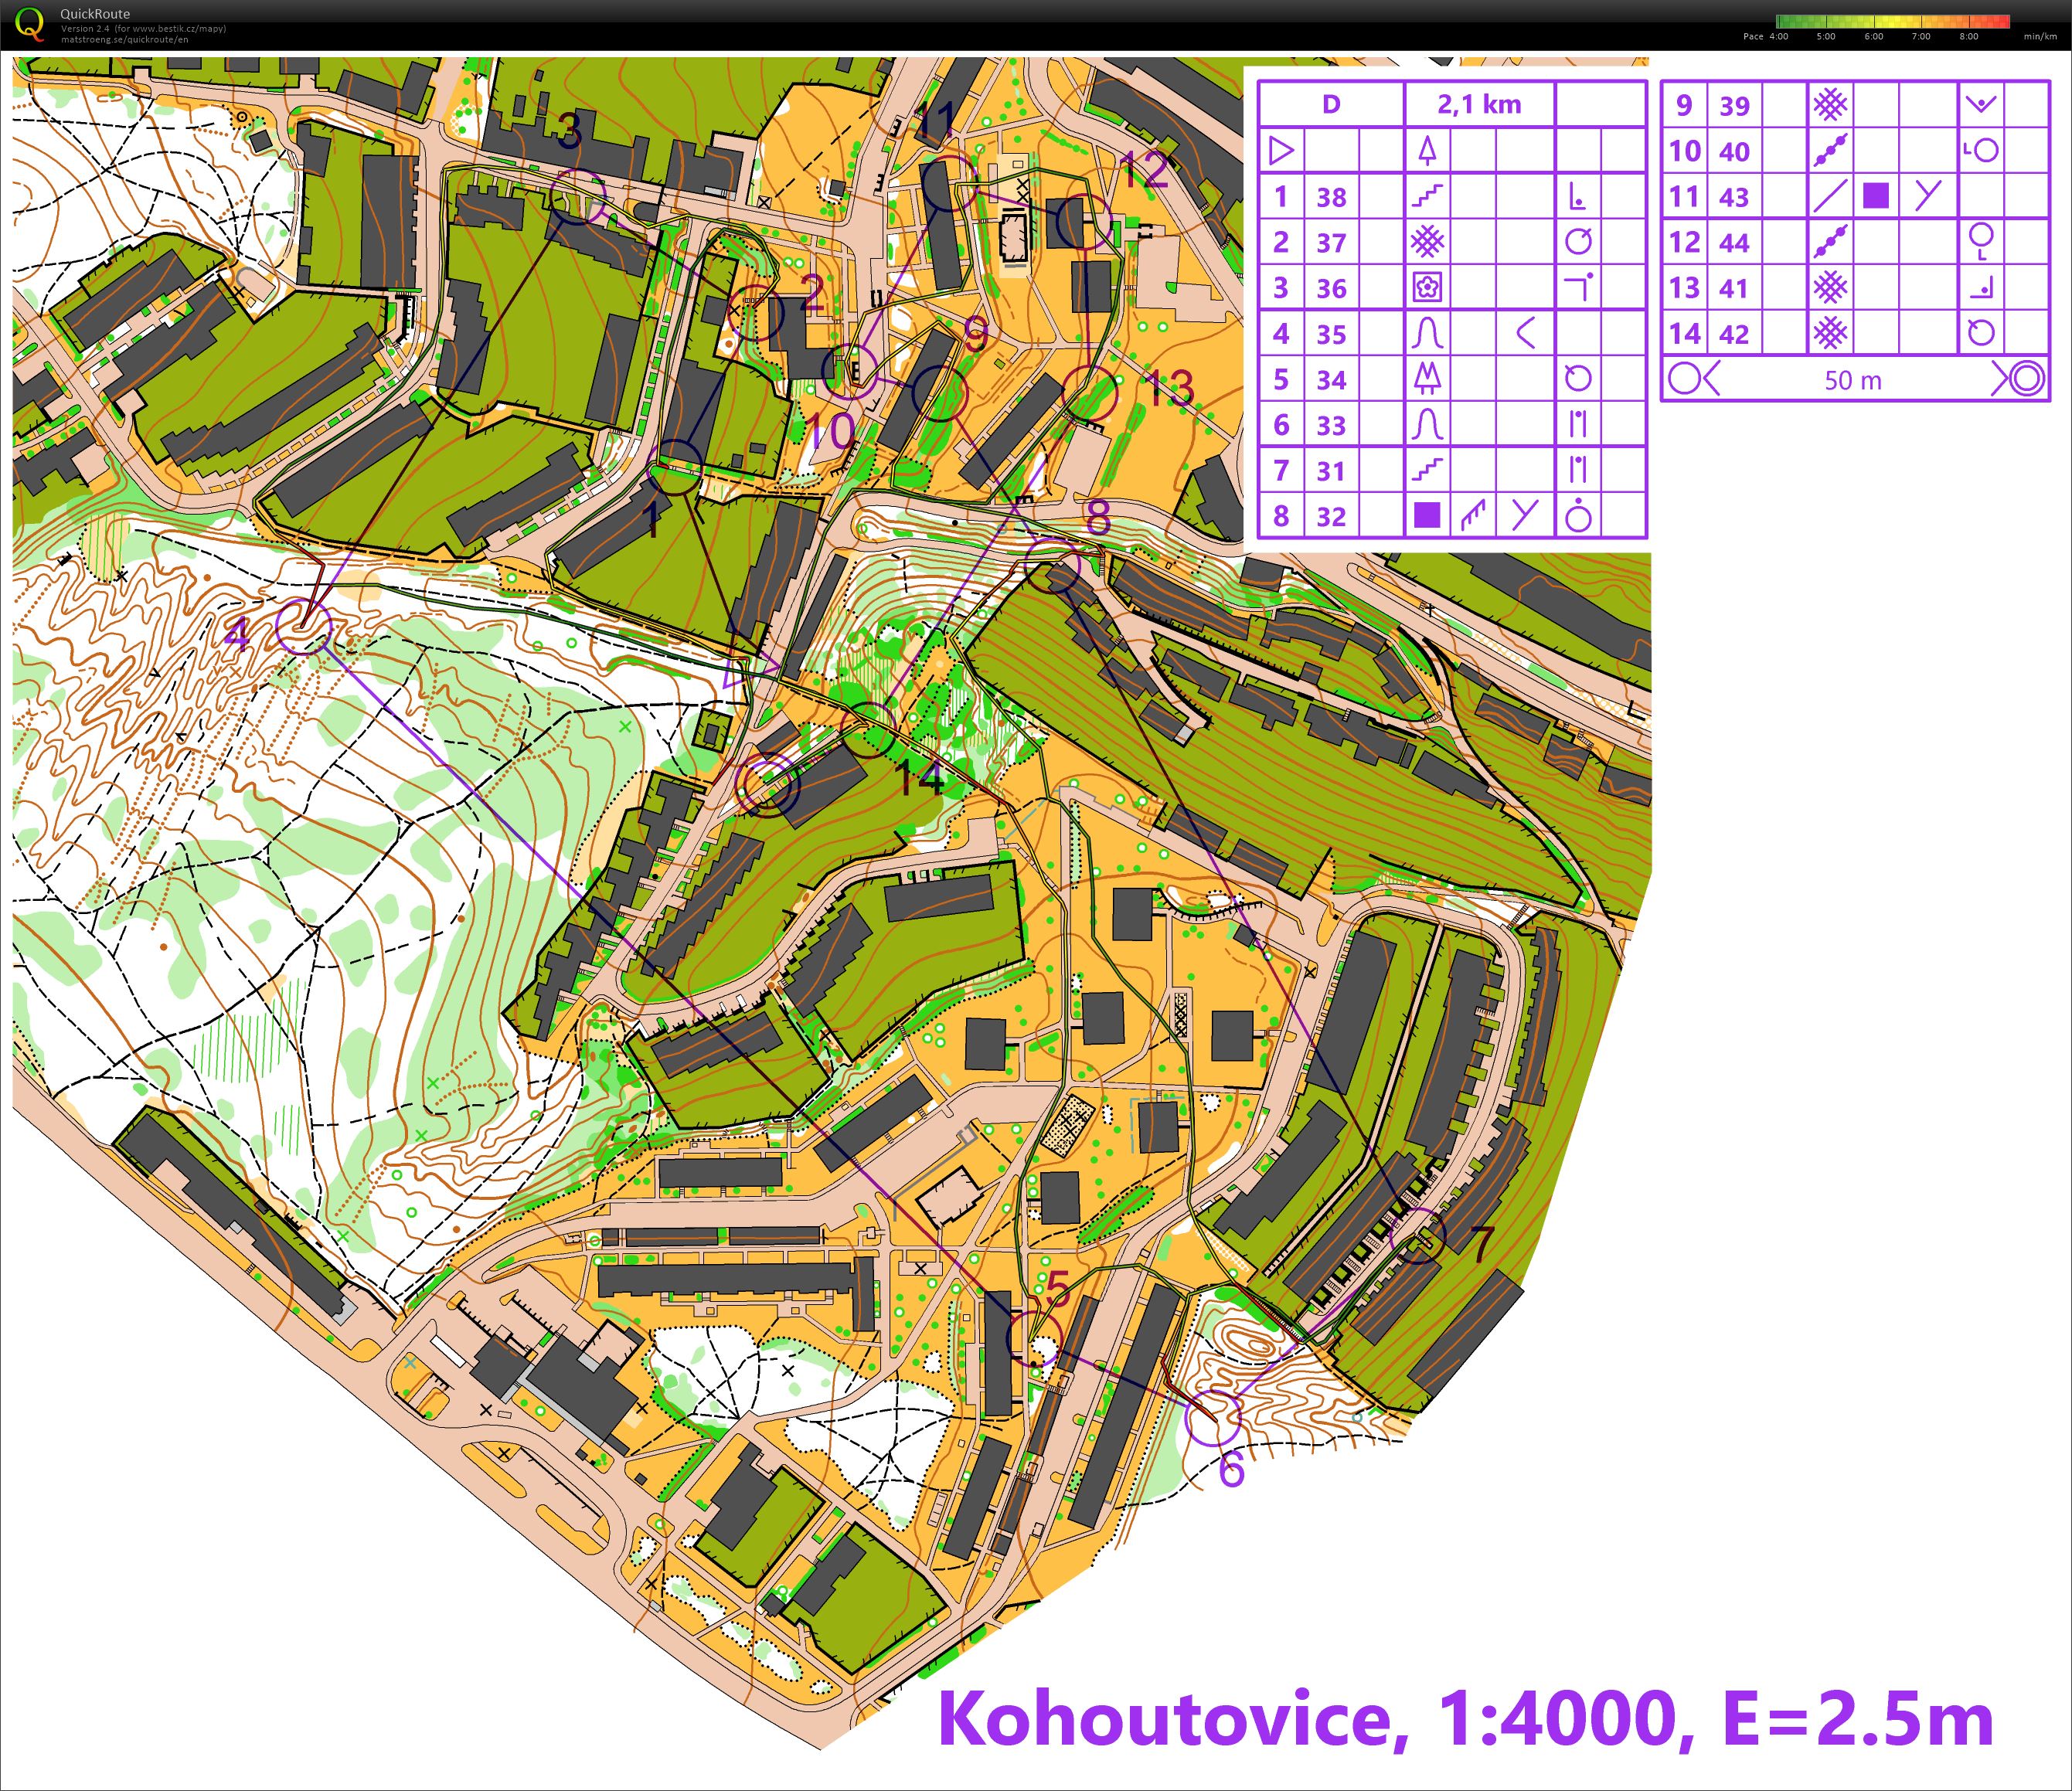 Kohoutovice sprint (16-05-2021)